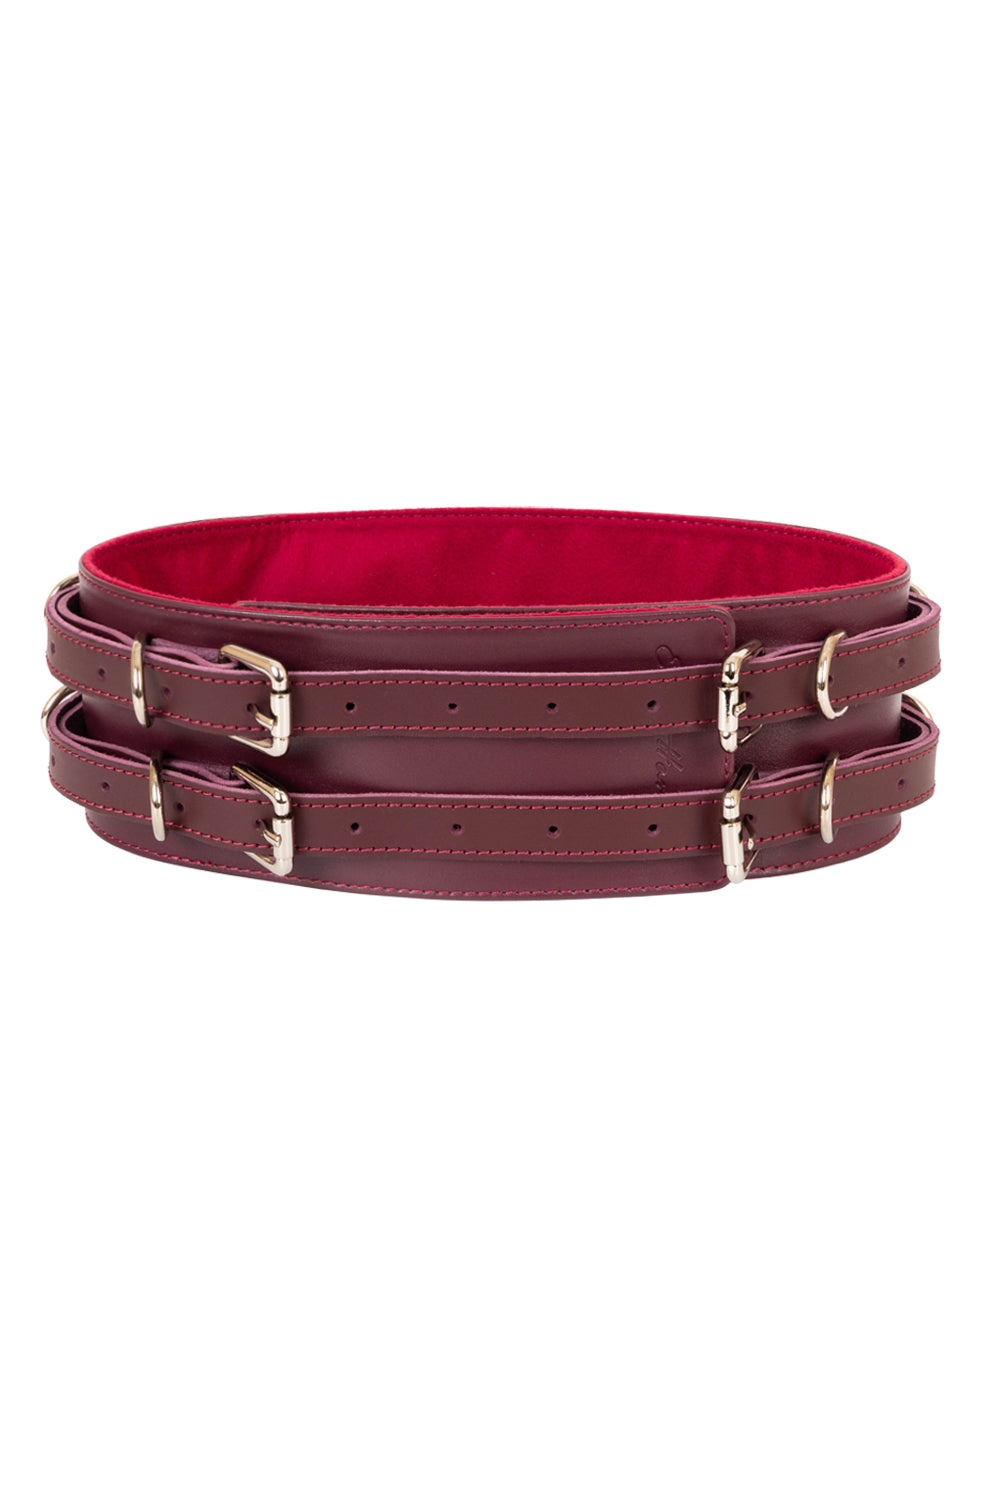 Leather Waist Belt. Burgundy